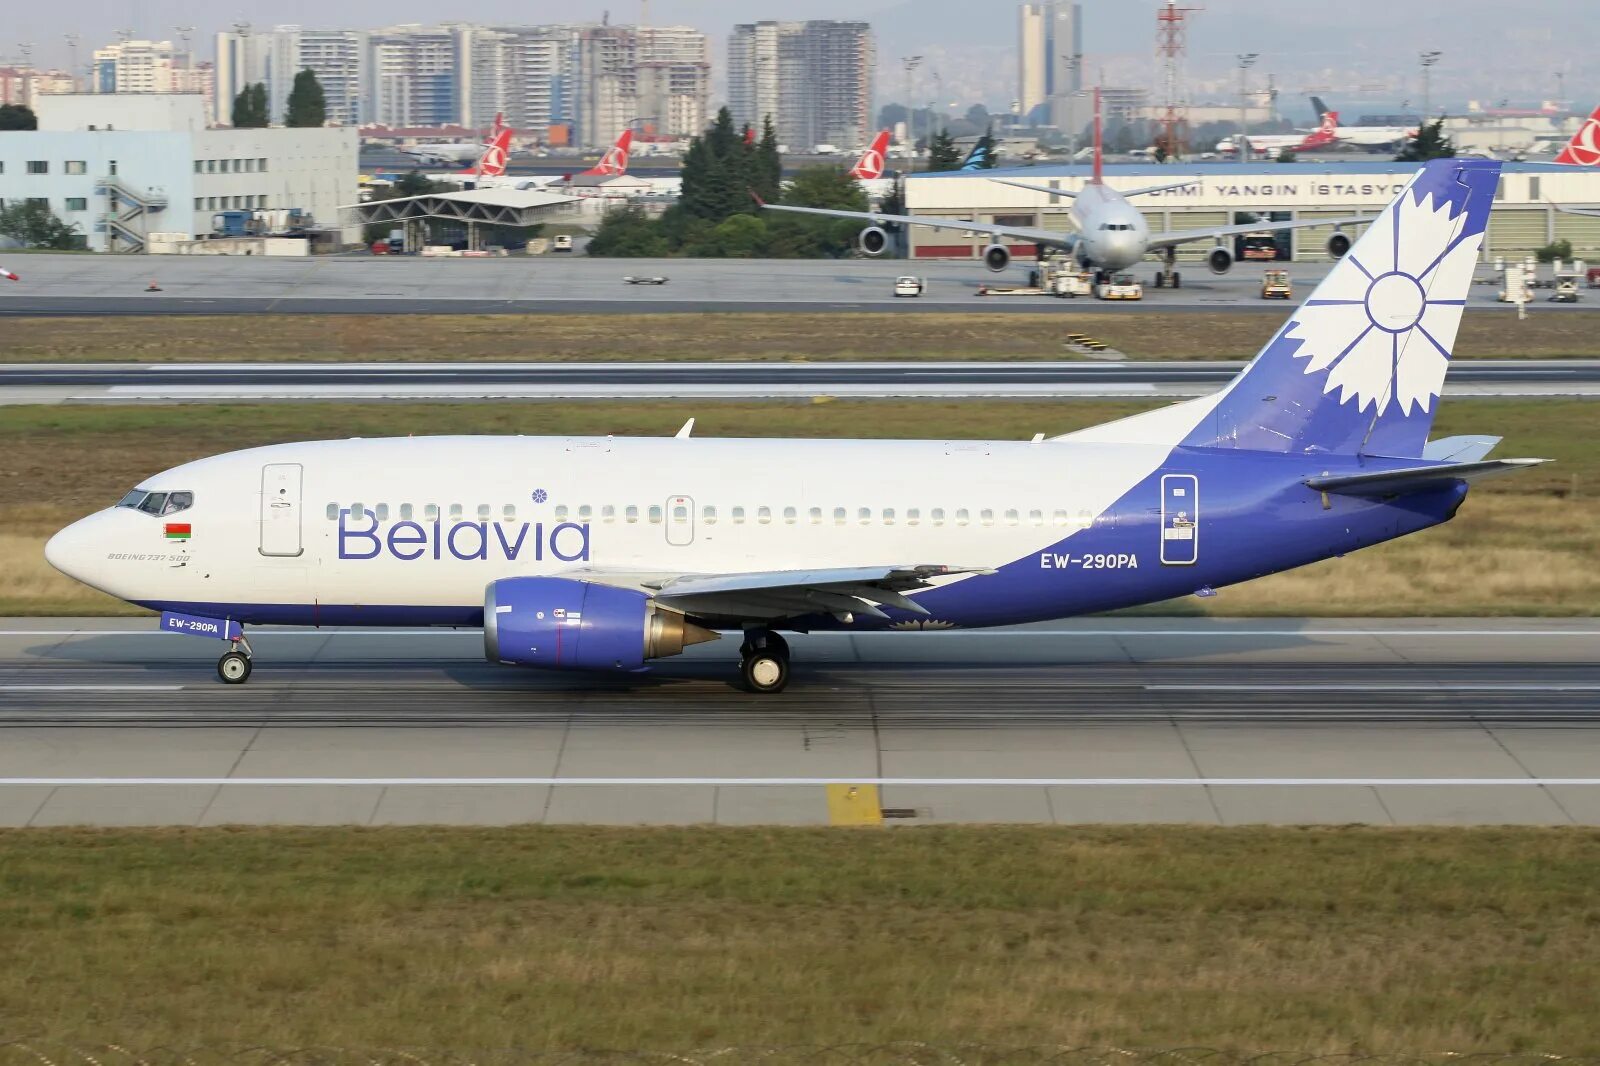 Самолет минск грузия. EW-290pa. Belavia Boeing 737 500 x plane.